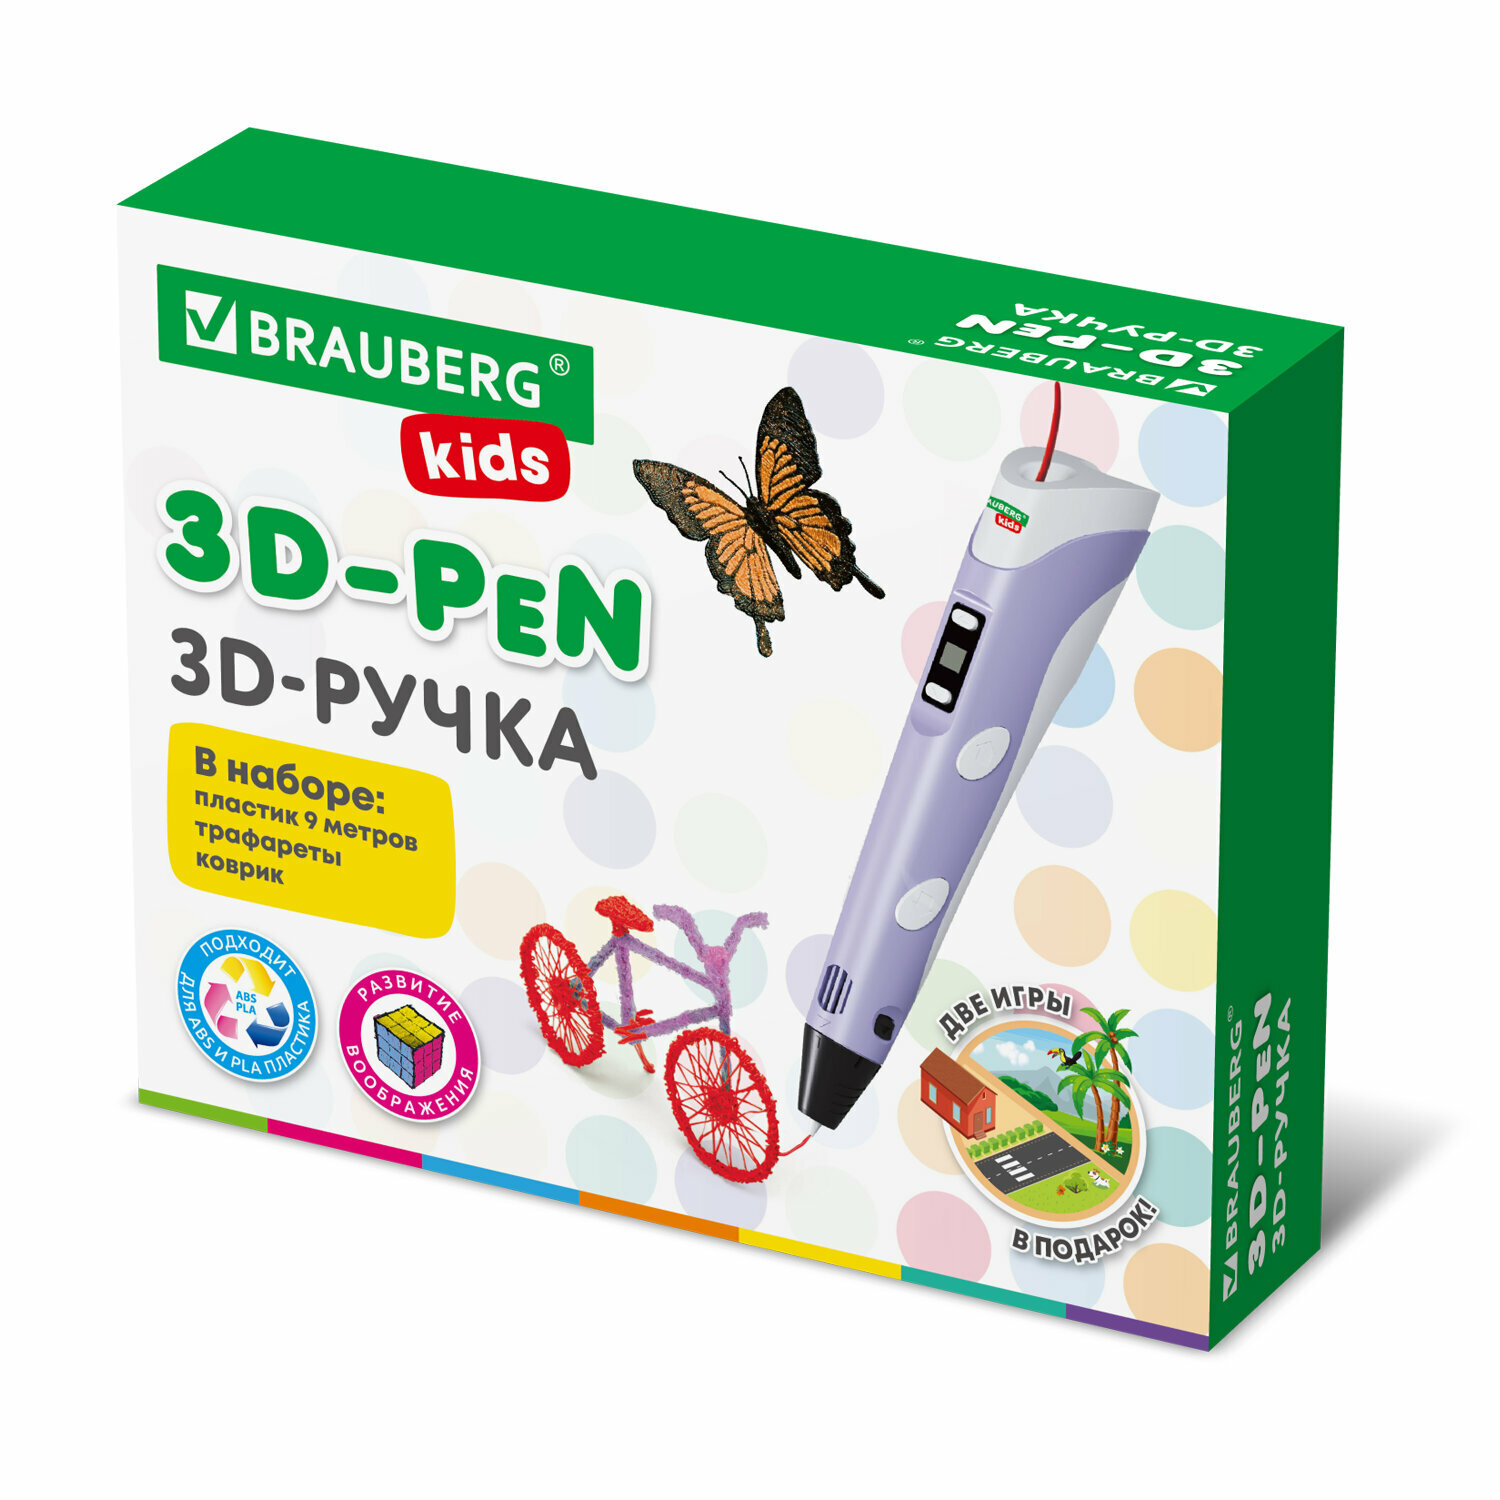 Ручка 3D с трафаретами PLA - пластиком и термоковриком BRAUBERG KIDS 665188 В комплекте: 1